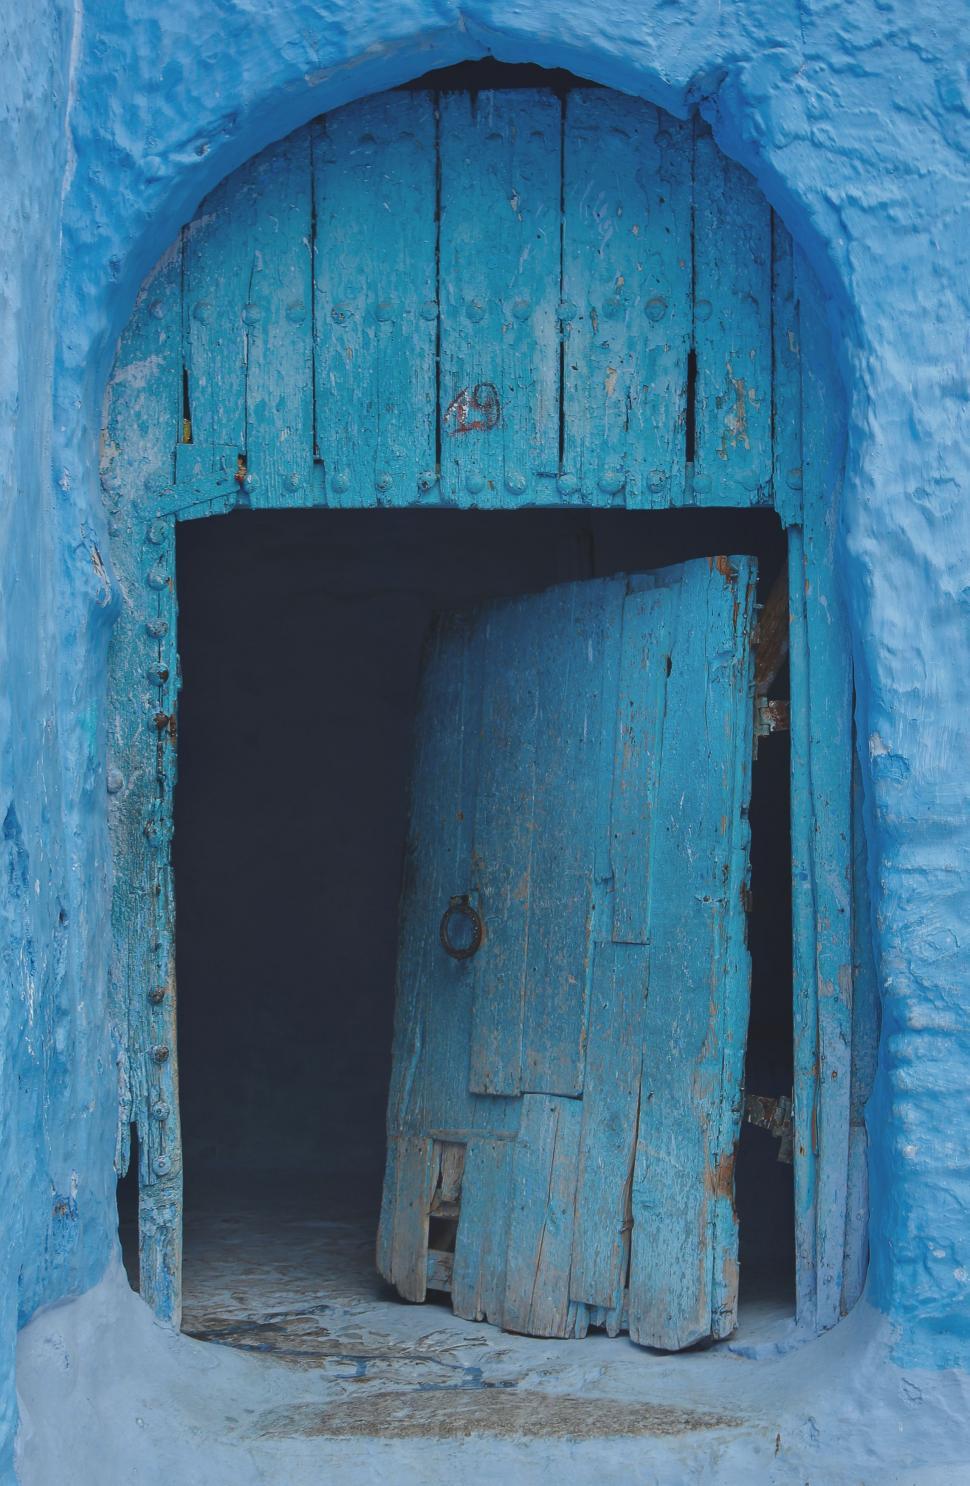 Free Image of Blue Building With Wooden Door 